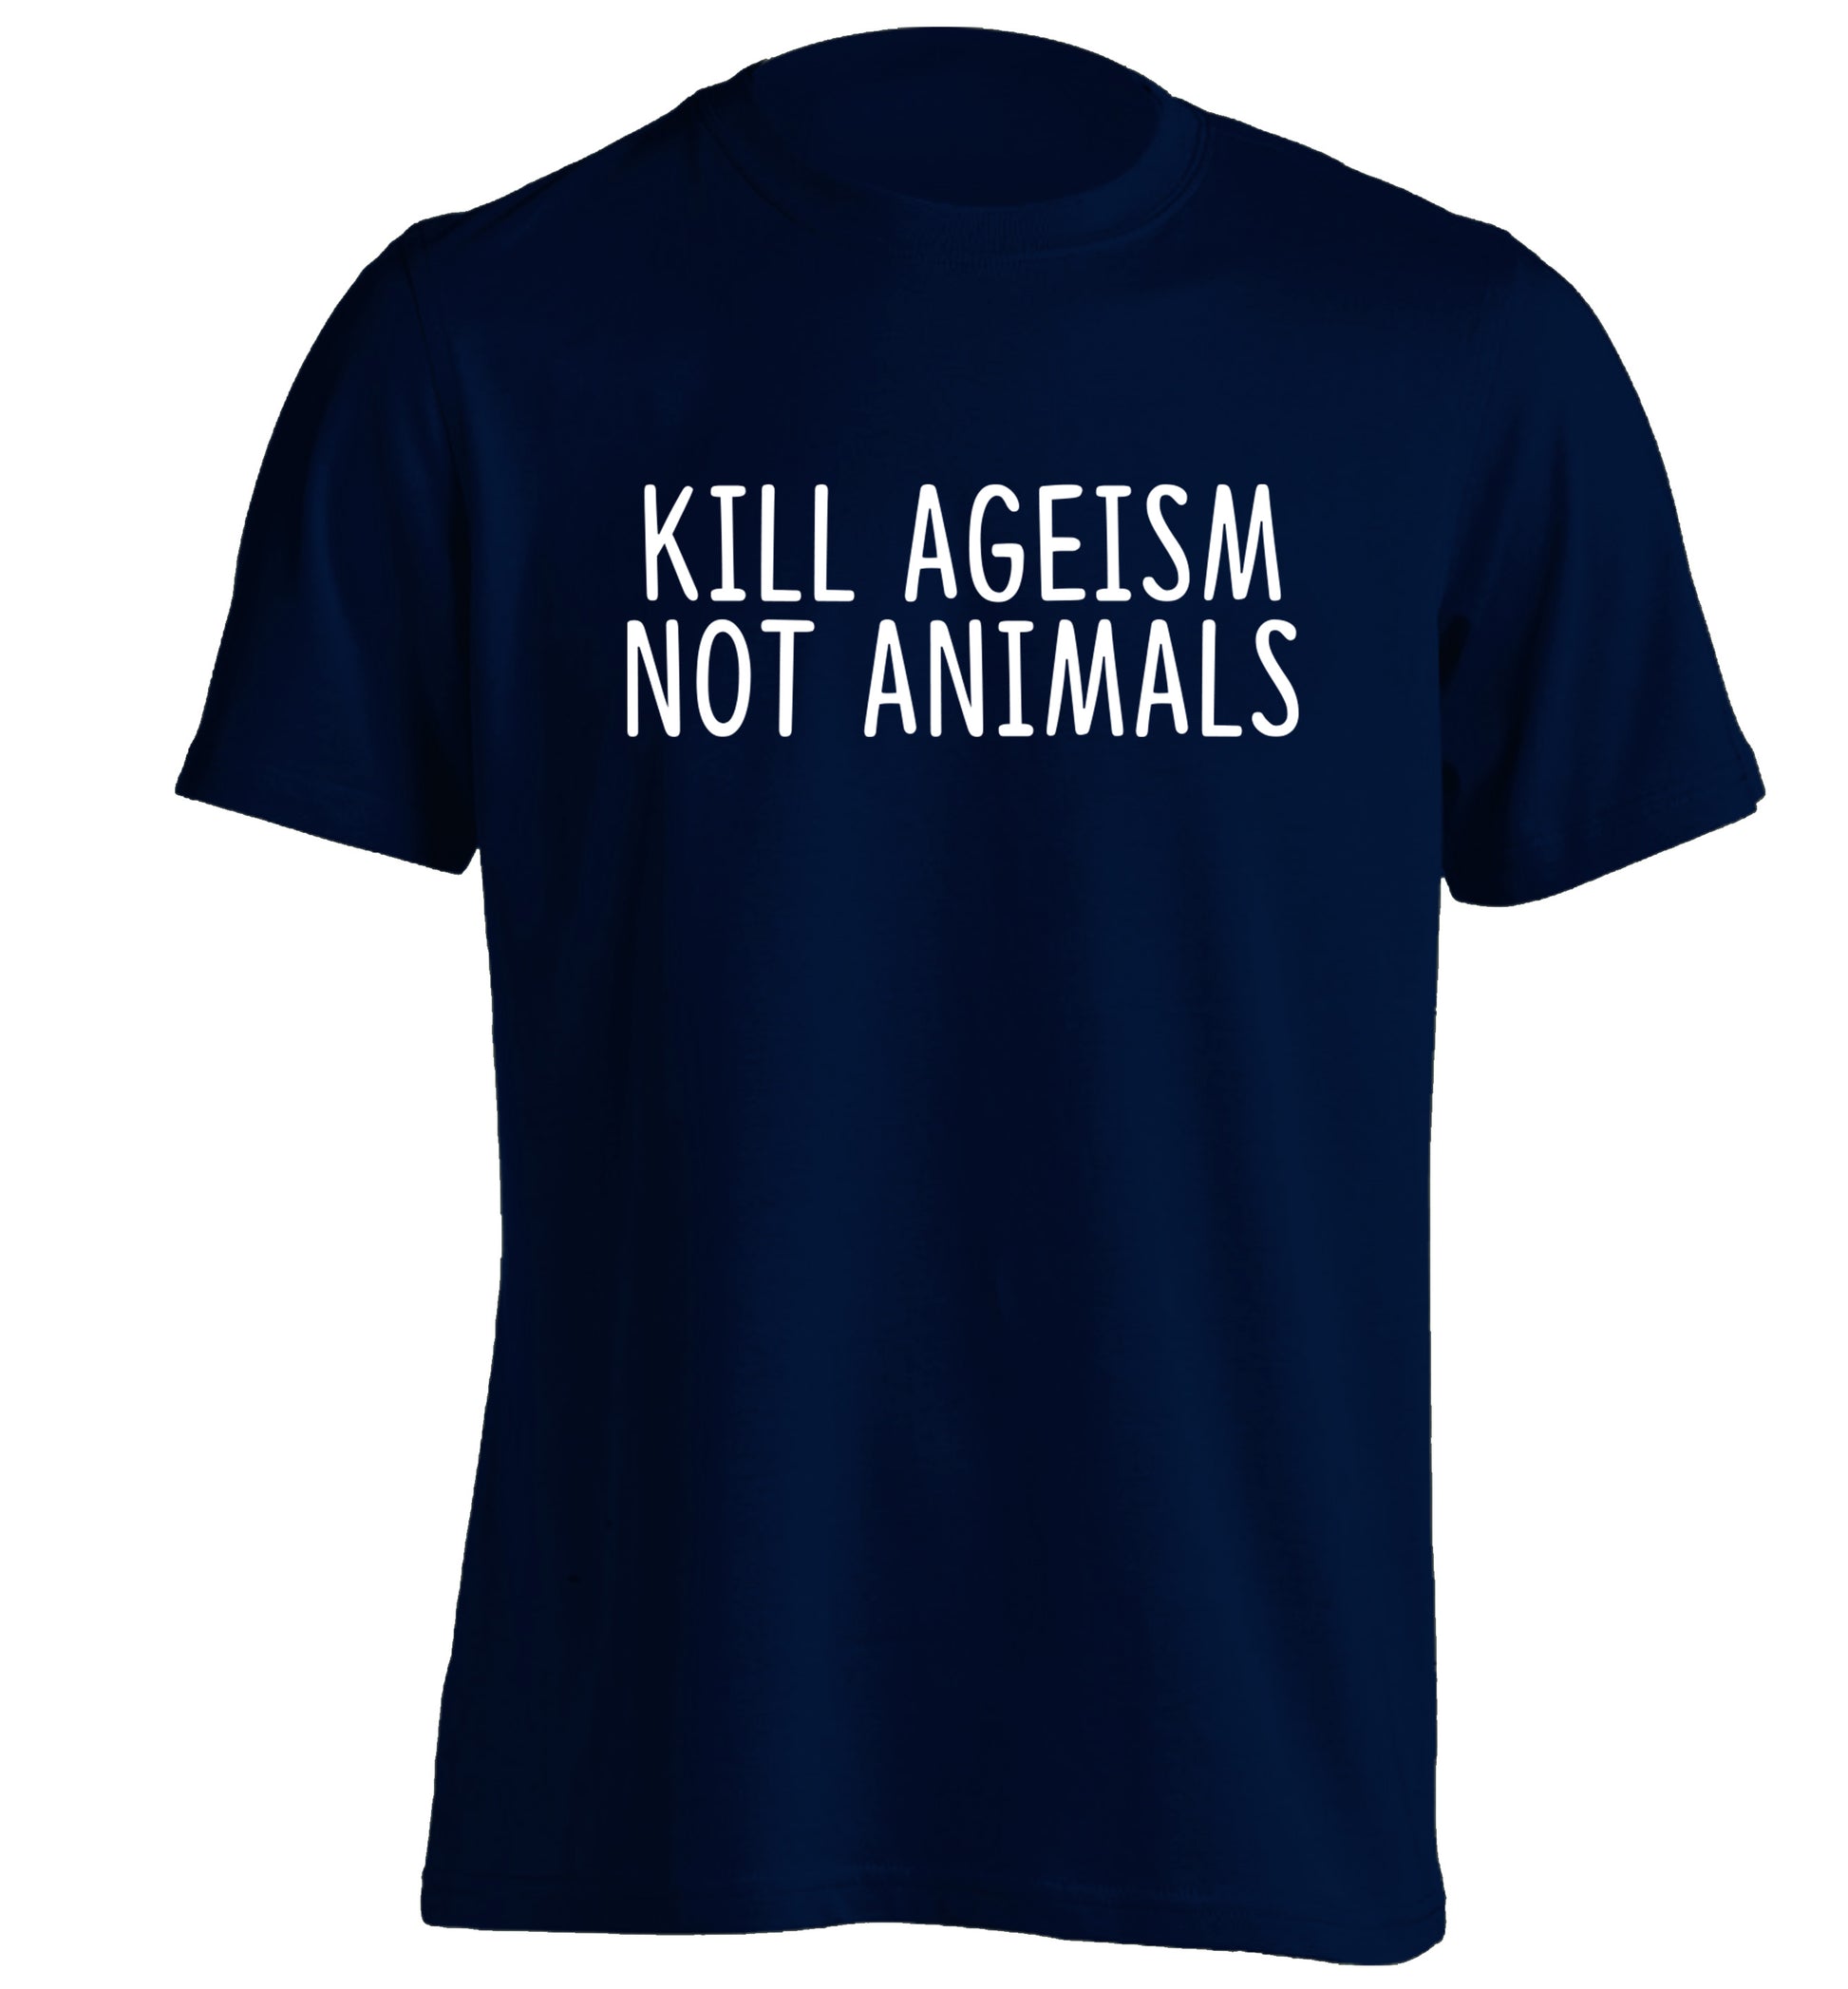 Kill Ageism Not Animals adults unisex navy Tshirt 2XL